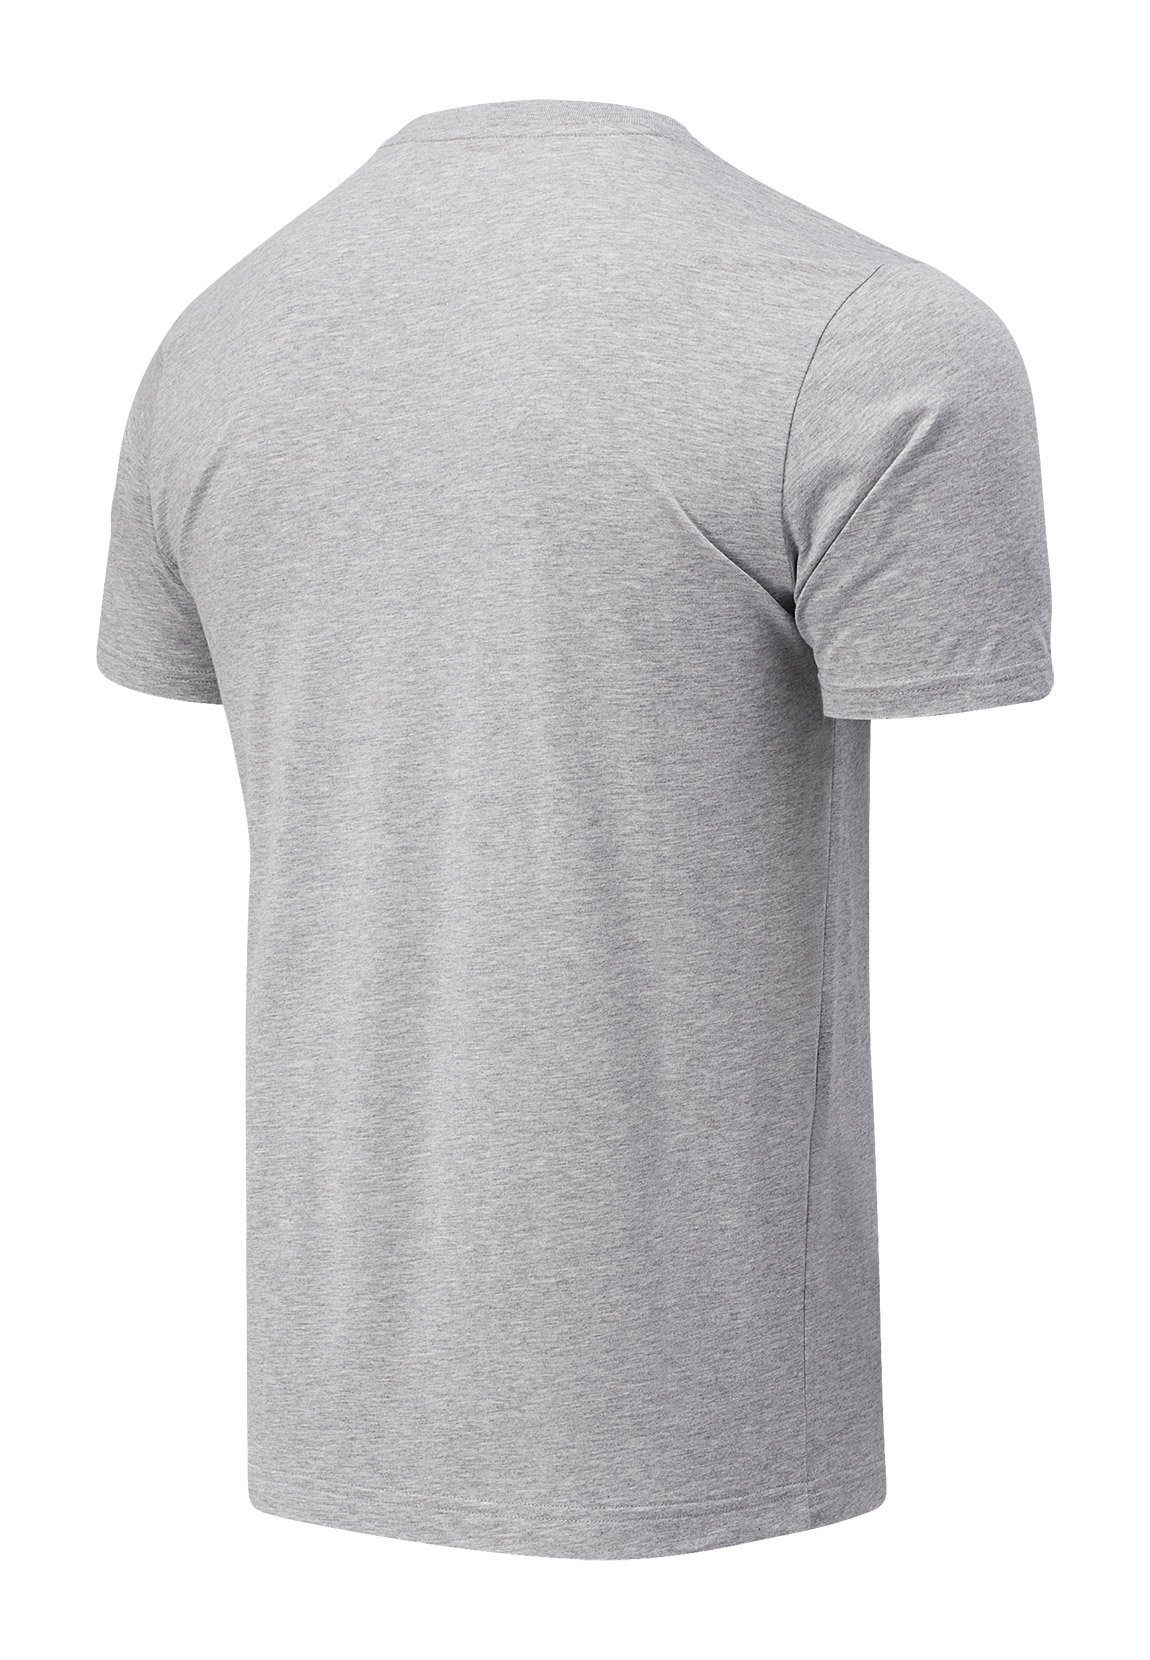 T-Shirt ATHLGREY Balance CORE CLASSIC AG MT03905 New LOGO TEE Athletic Balance Grey T-Shirt New Gau